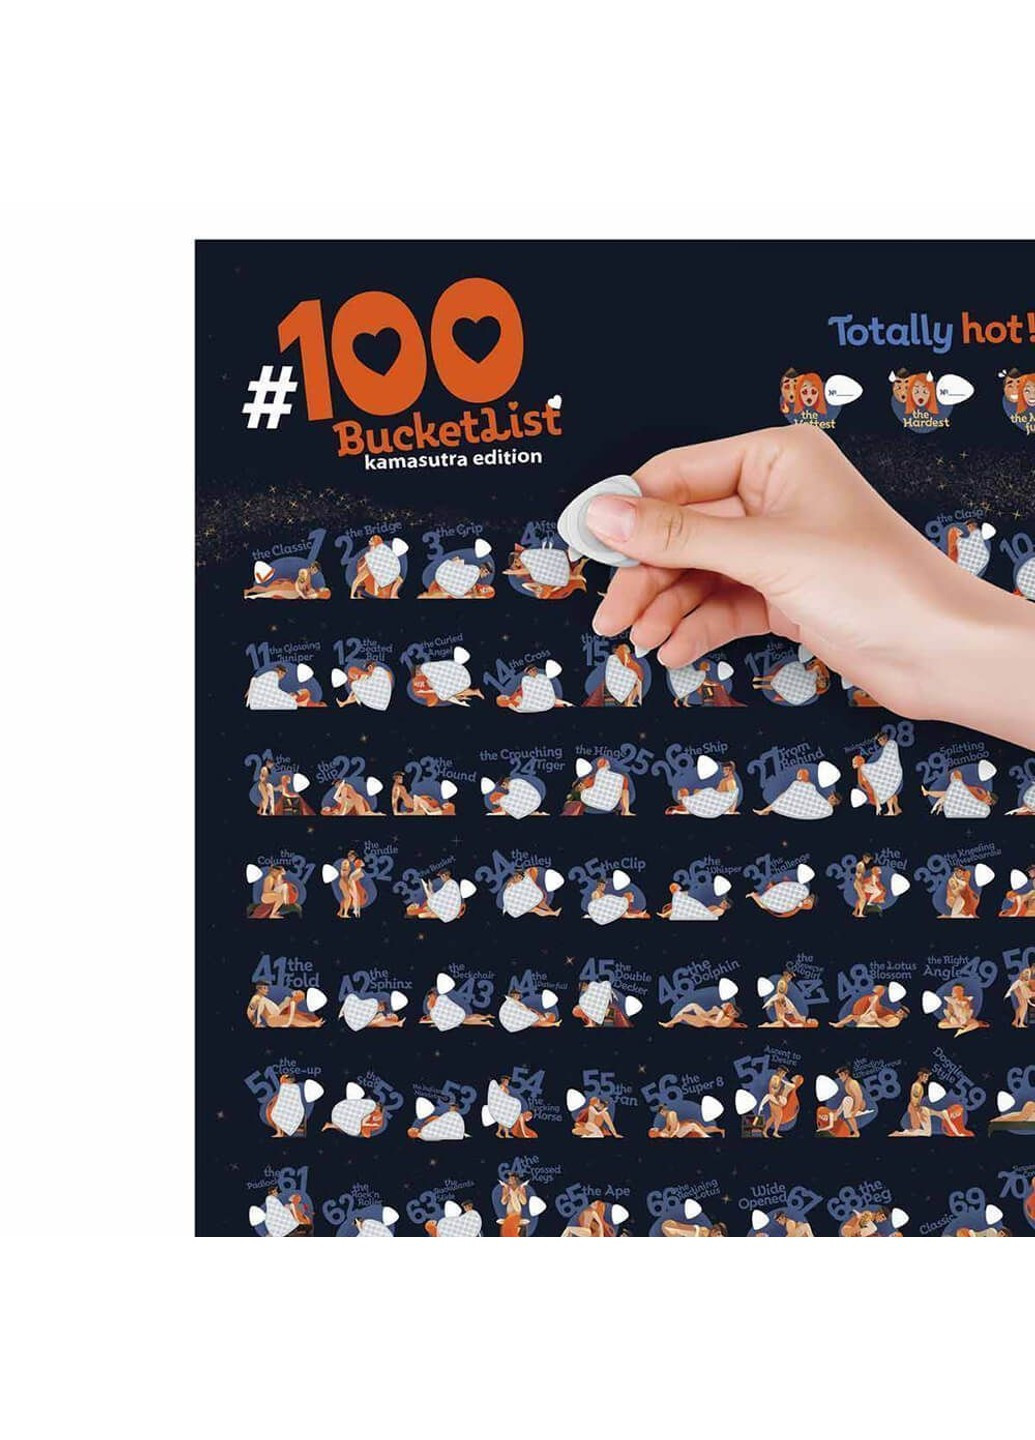 Скретч постер "#100BucketList KAMASUTRA edition" (рама) 1DEA.me (254288790)